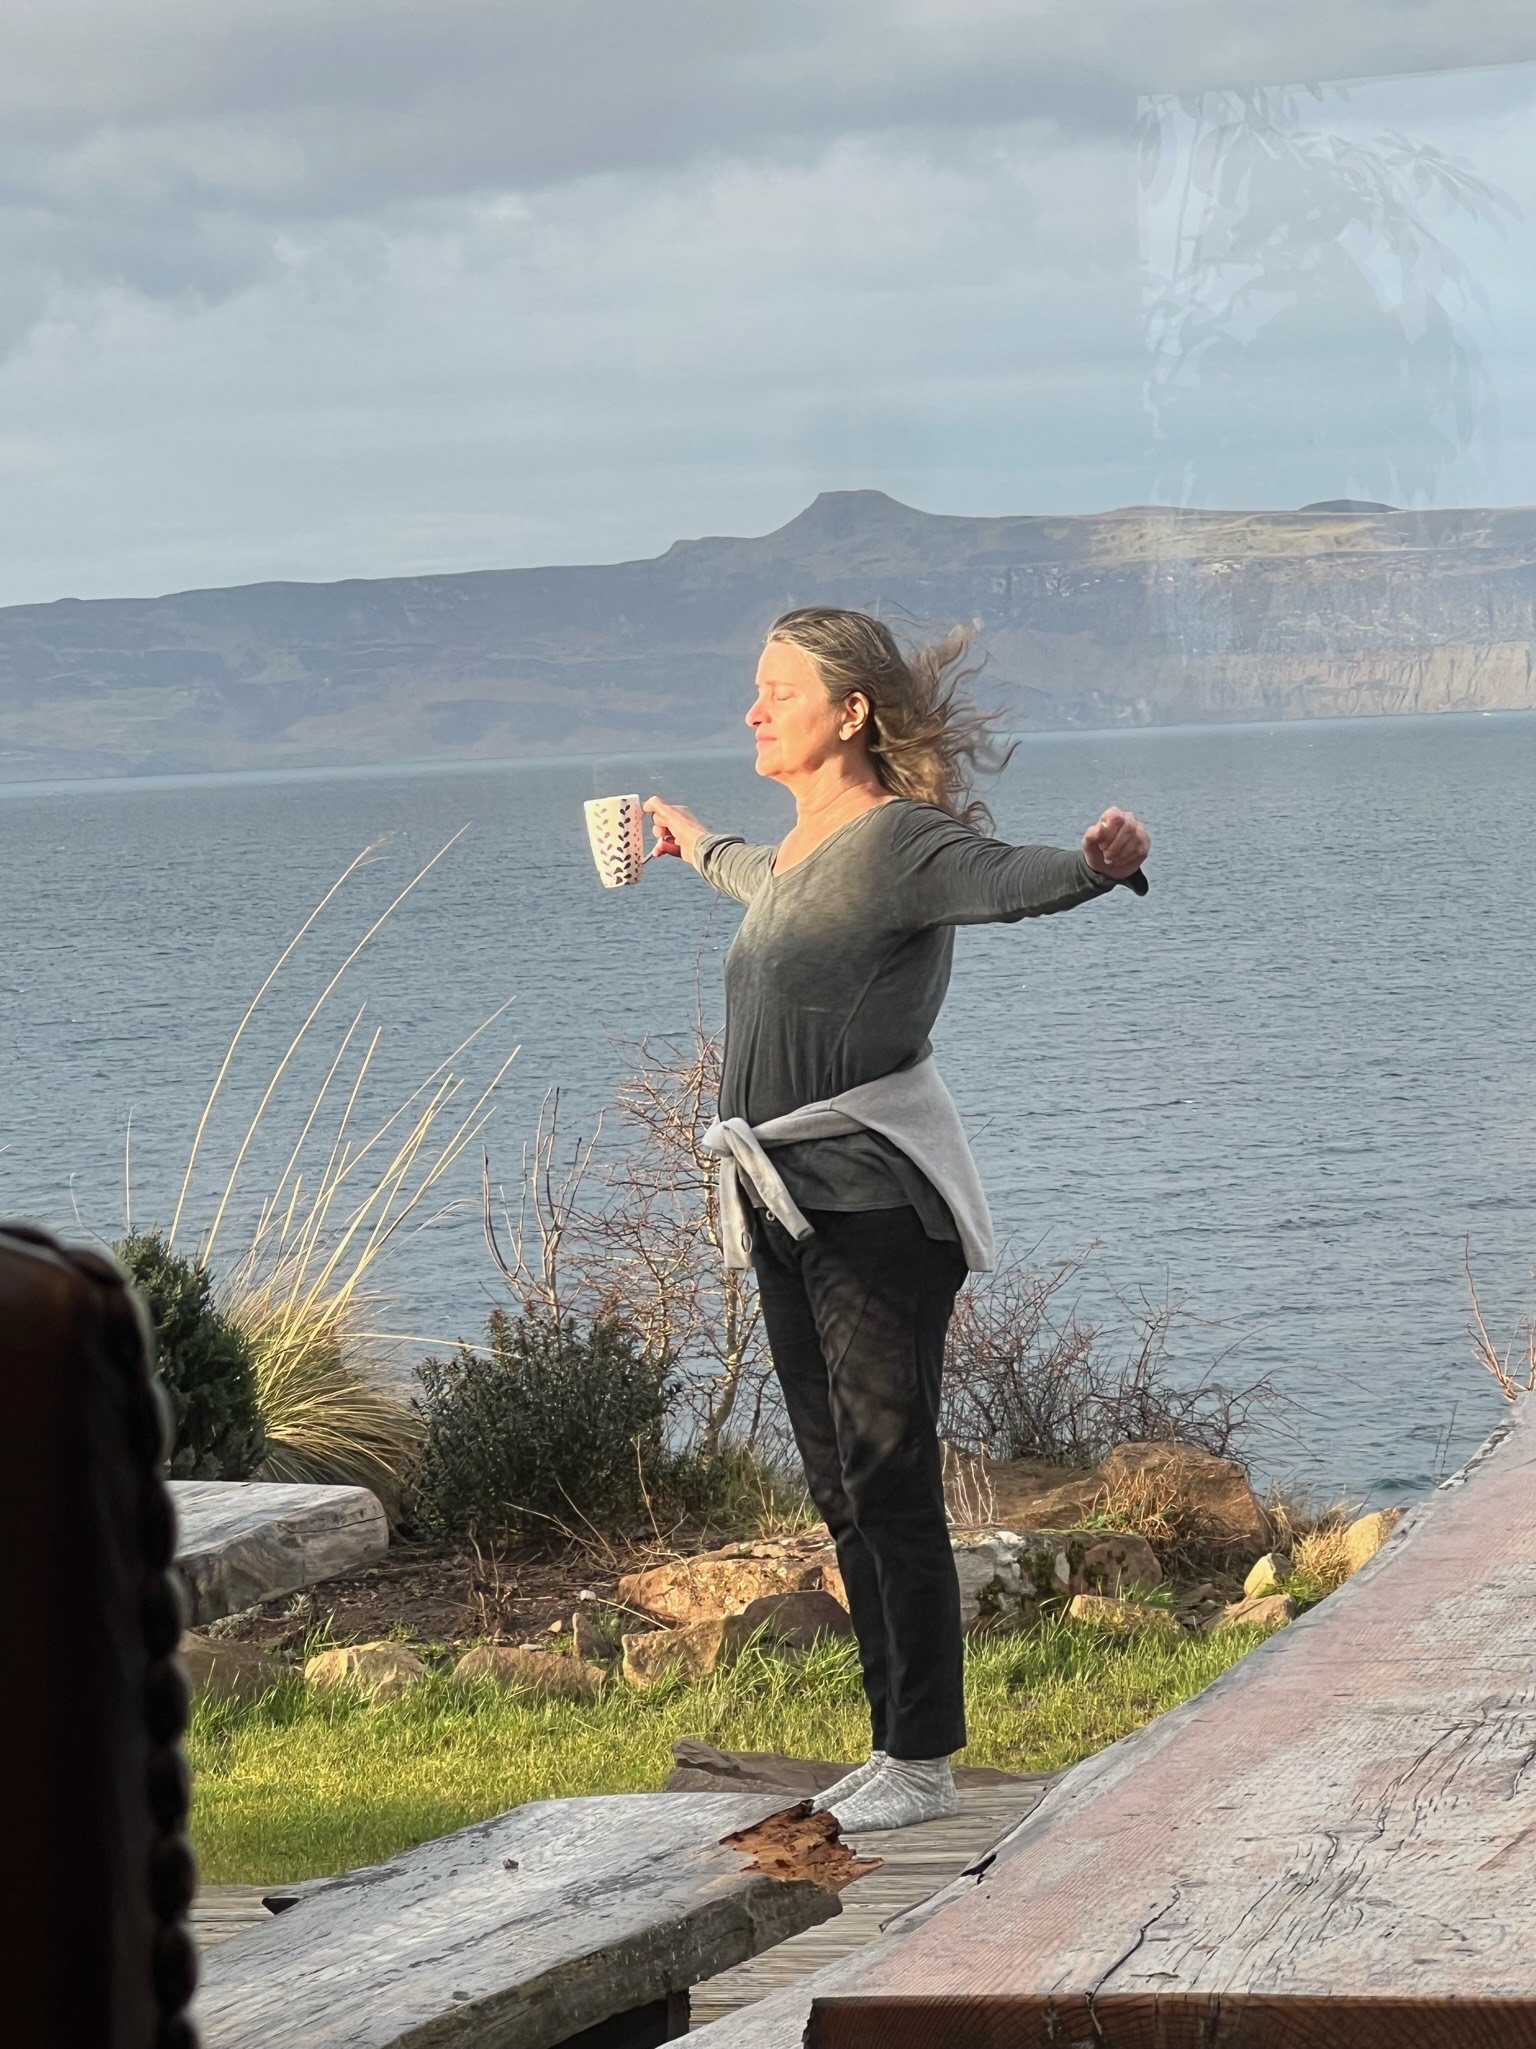 Coffee, Yoga and Happiness